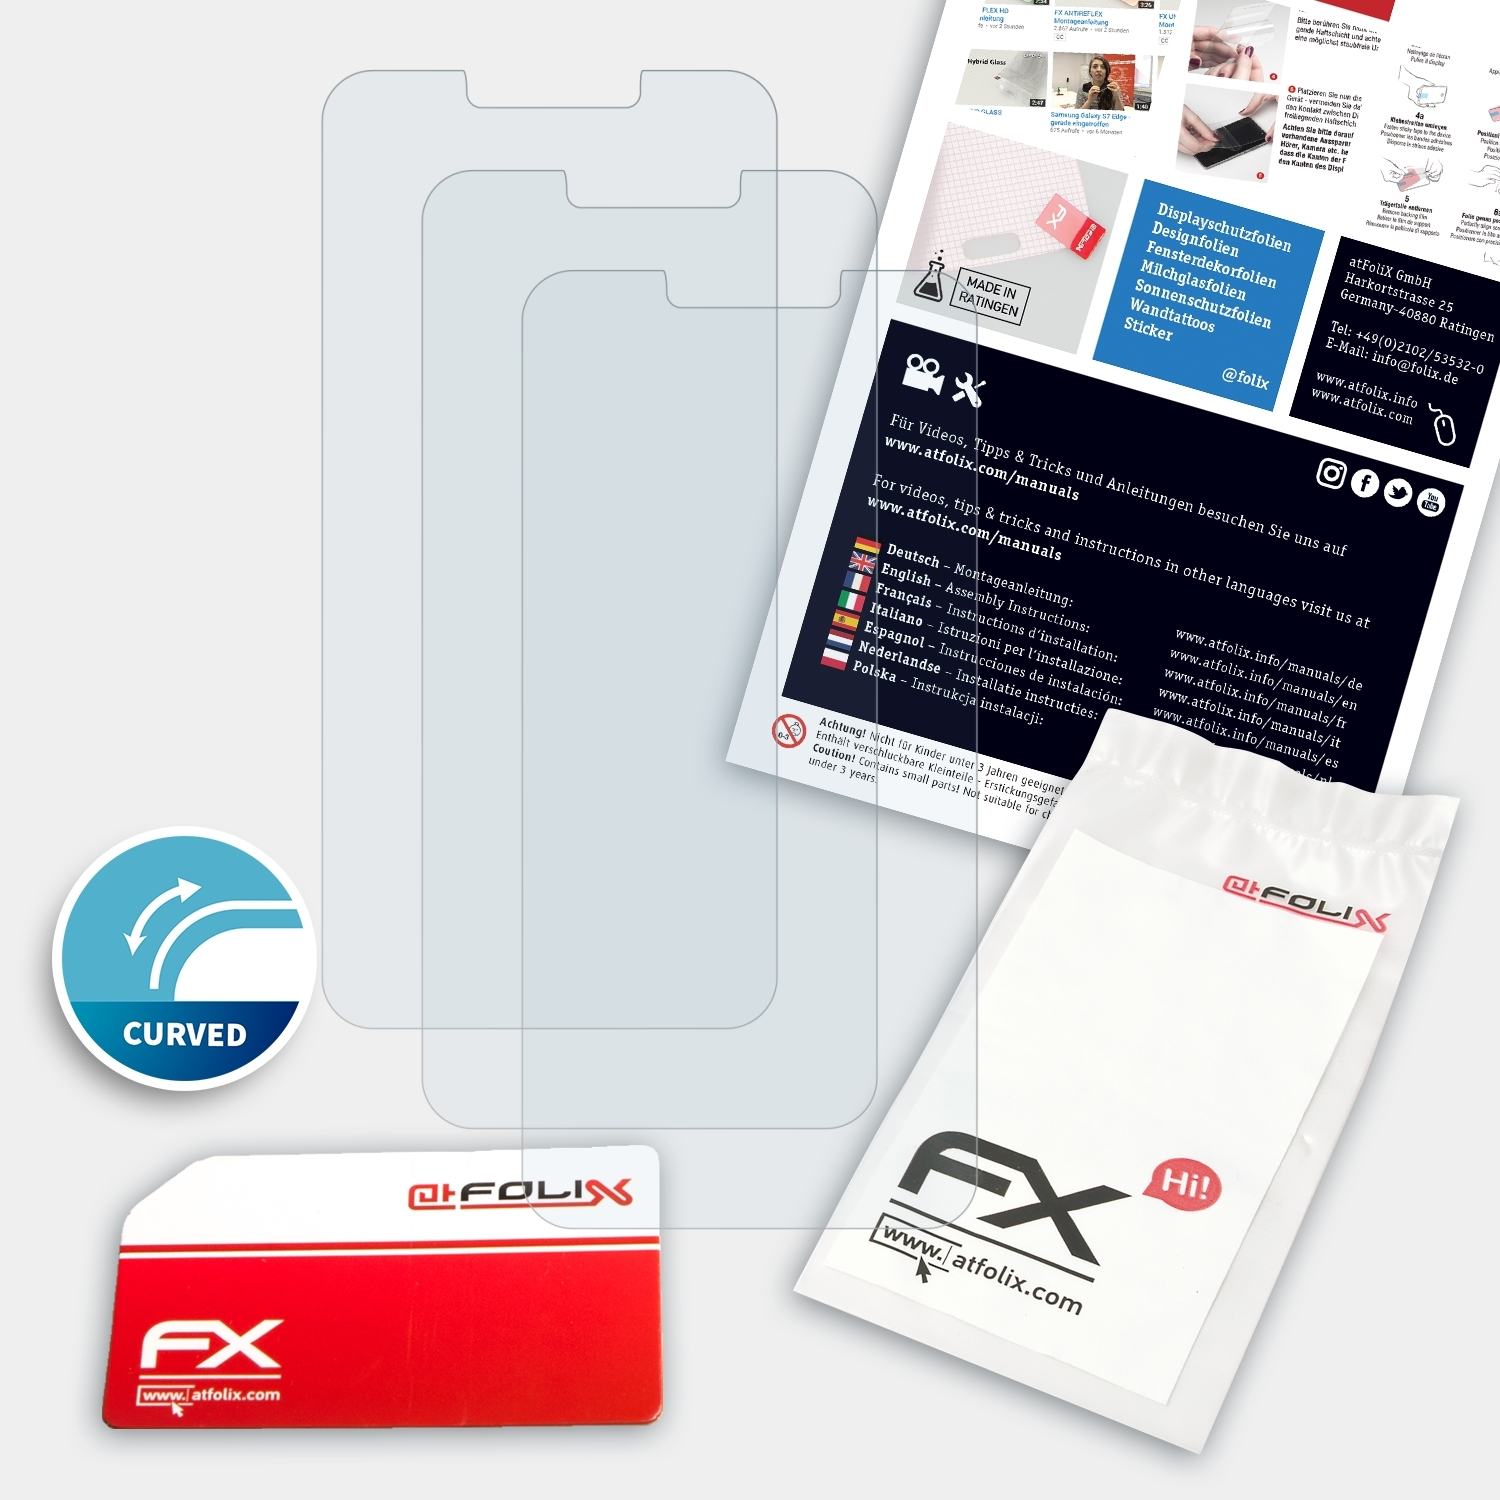 ATFOLIX 3x FX-ActiFleX Displayschutz(für Tecno Pro) Spark 3